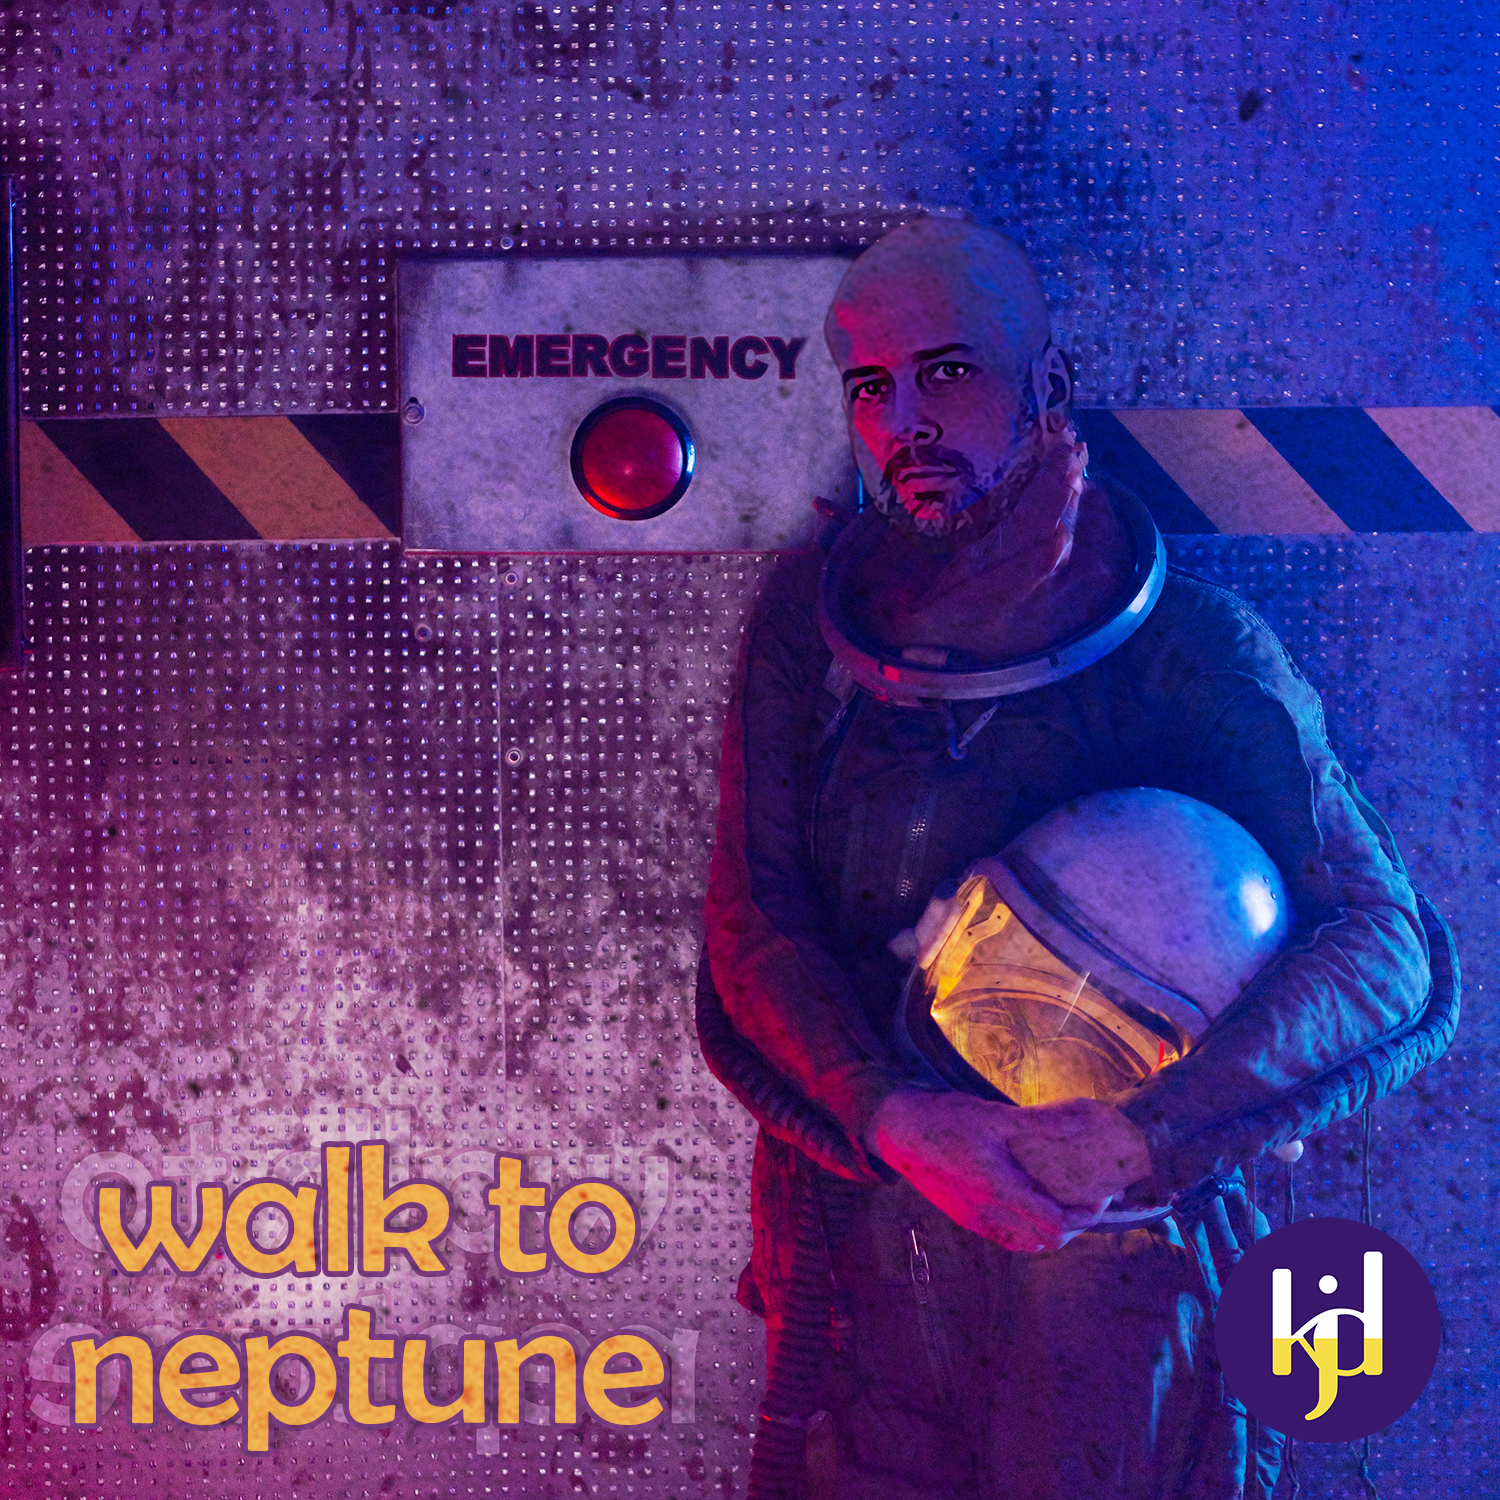 Walk to Neptune album cover by kevinjdrieberg